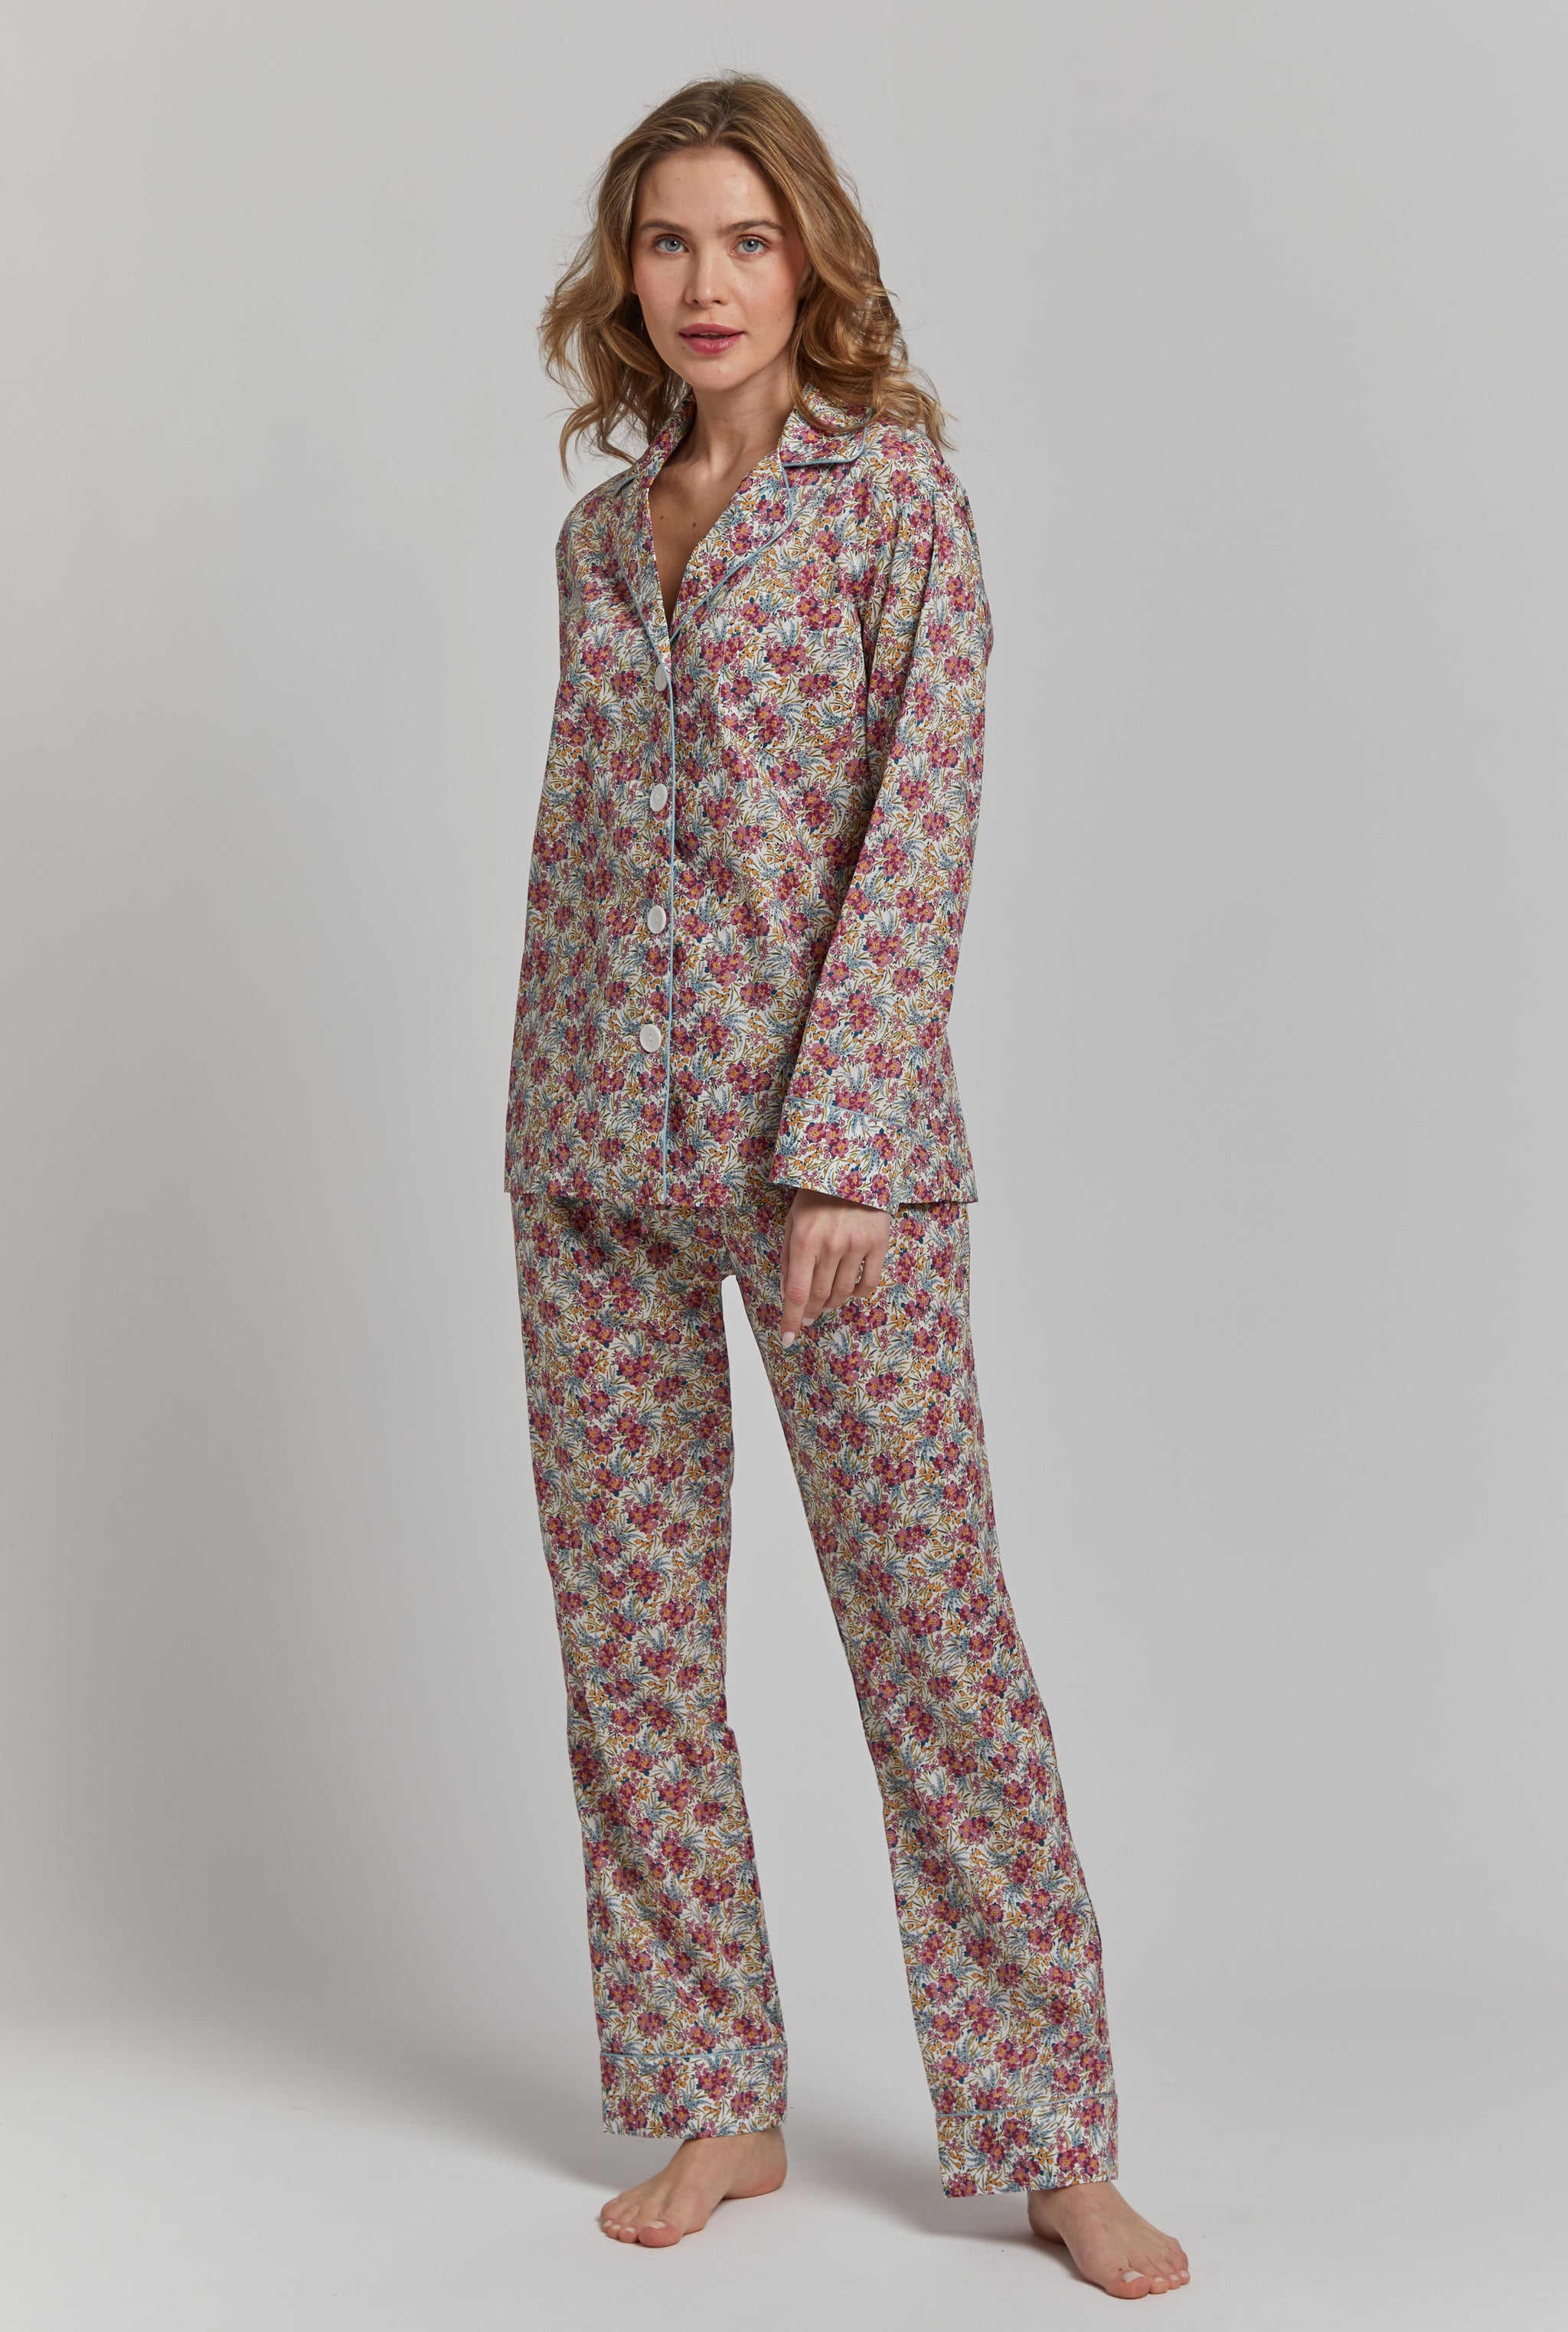 Elsa - Cotton Voile Sleeveless Capri Pajamas - Needham Lane Ltd.